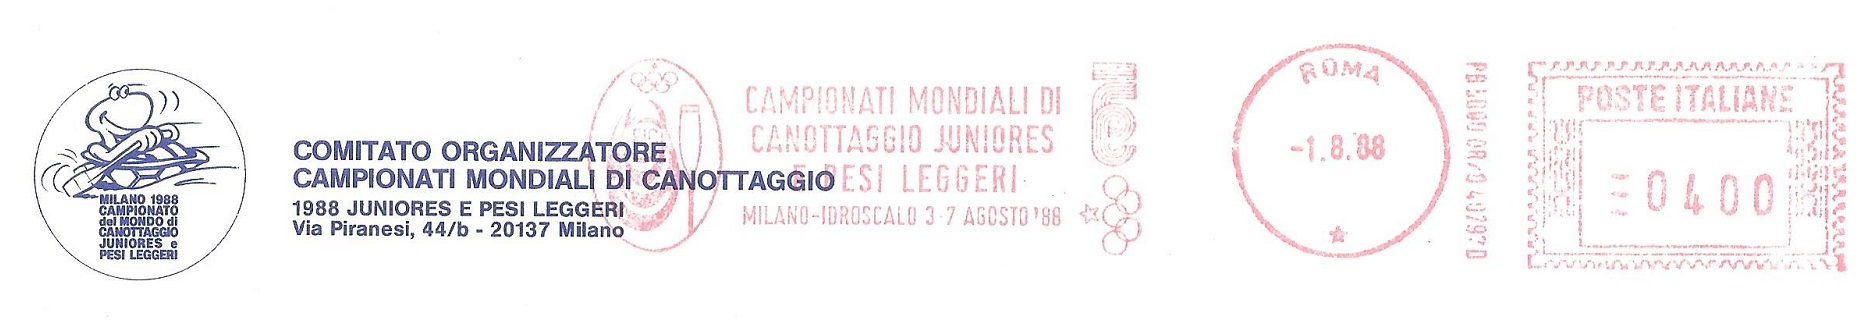 PM ITA 1988 Aug. 1st Roma Campionati Mondiali di Canottaggio Juniores e Pesi Leggeri Milano Idroscalo 3 7 Augusto 88 WRC for Juniors and Leightweights Milan 1988